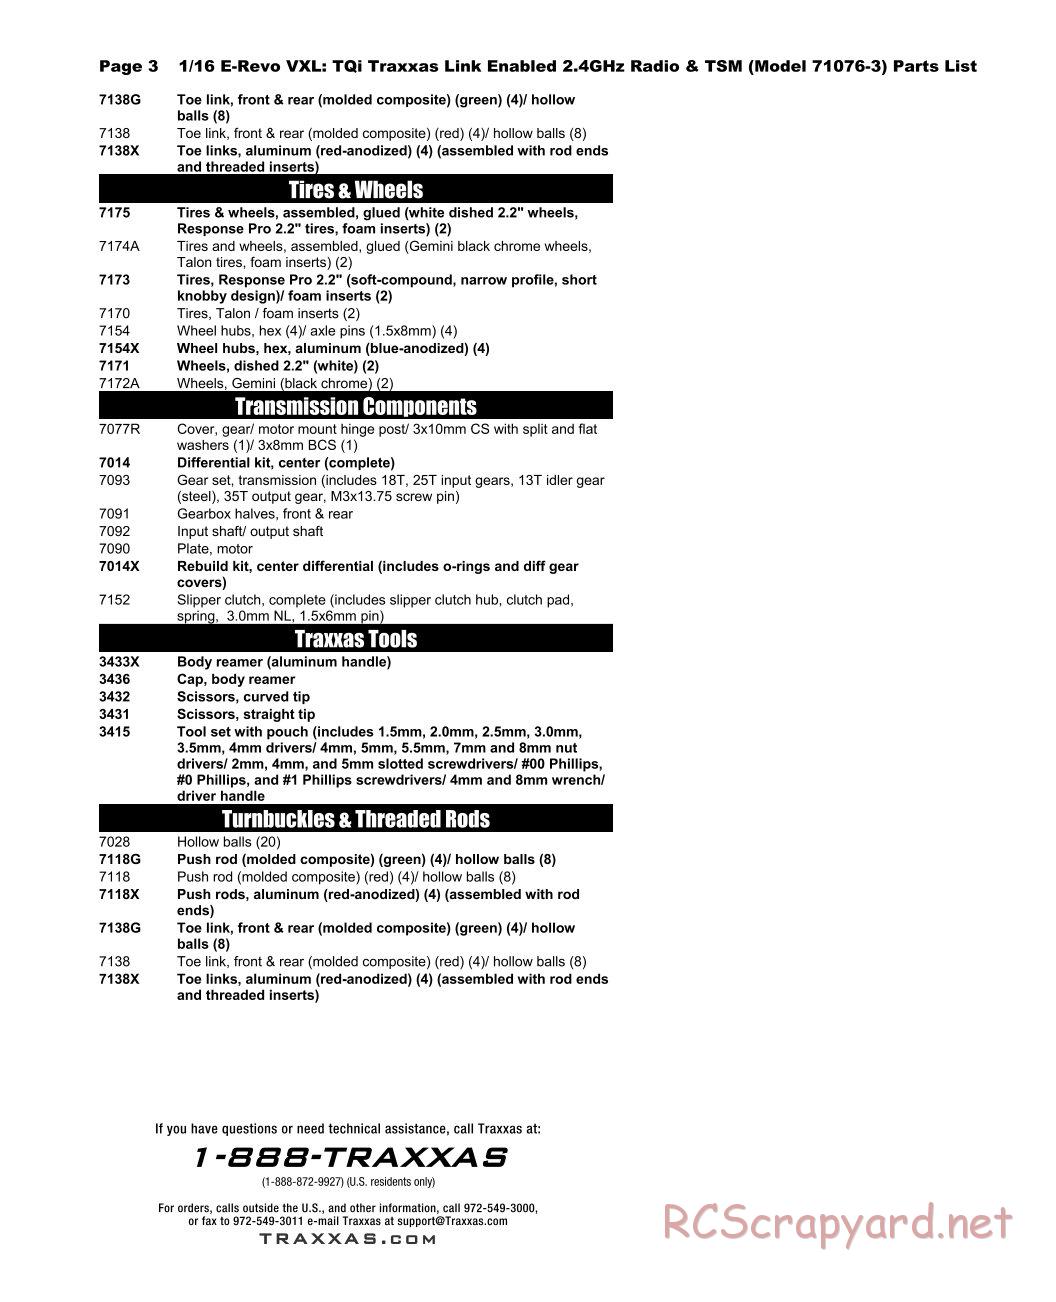 Traxxas - 1/16 E-Revo VXL TSM - Parts List - Page 3